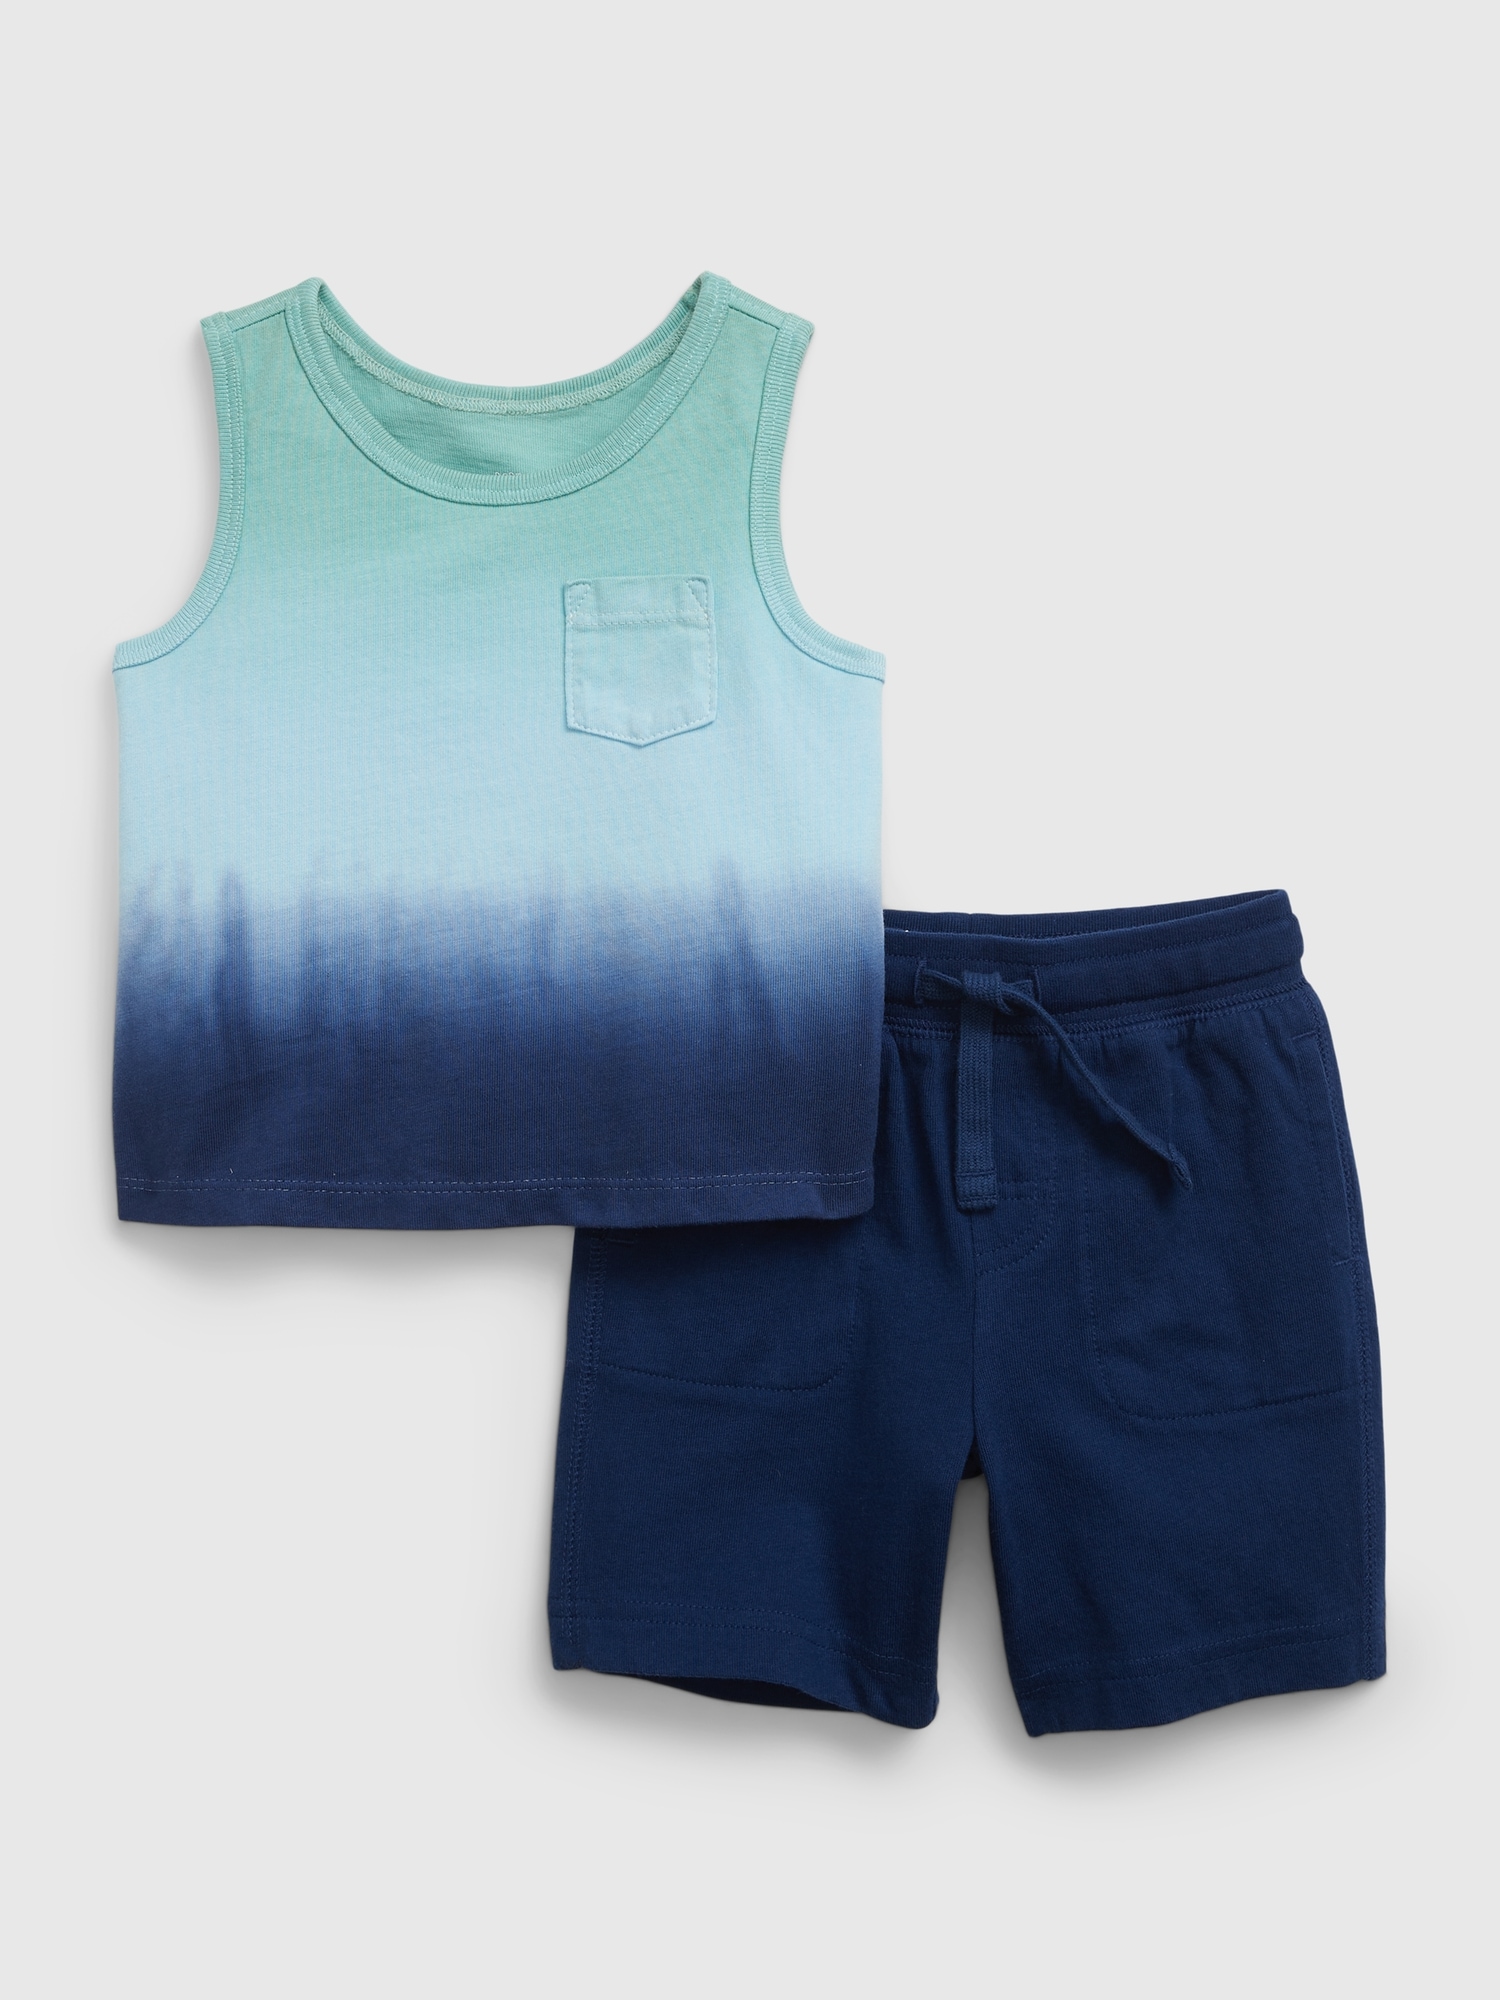 Gap Baby Organic Cotton Tank & Shorts Outfit Set blue. 1